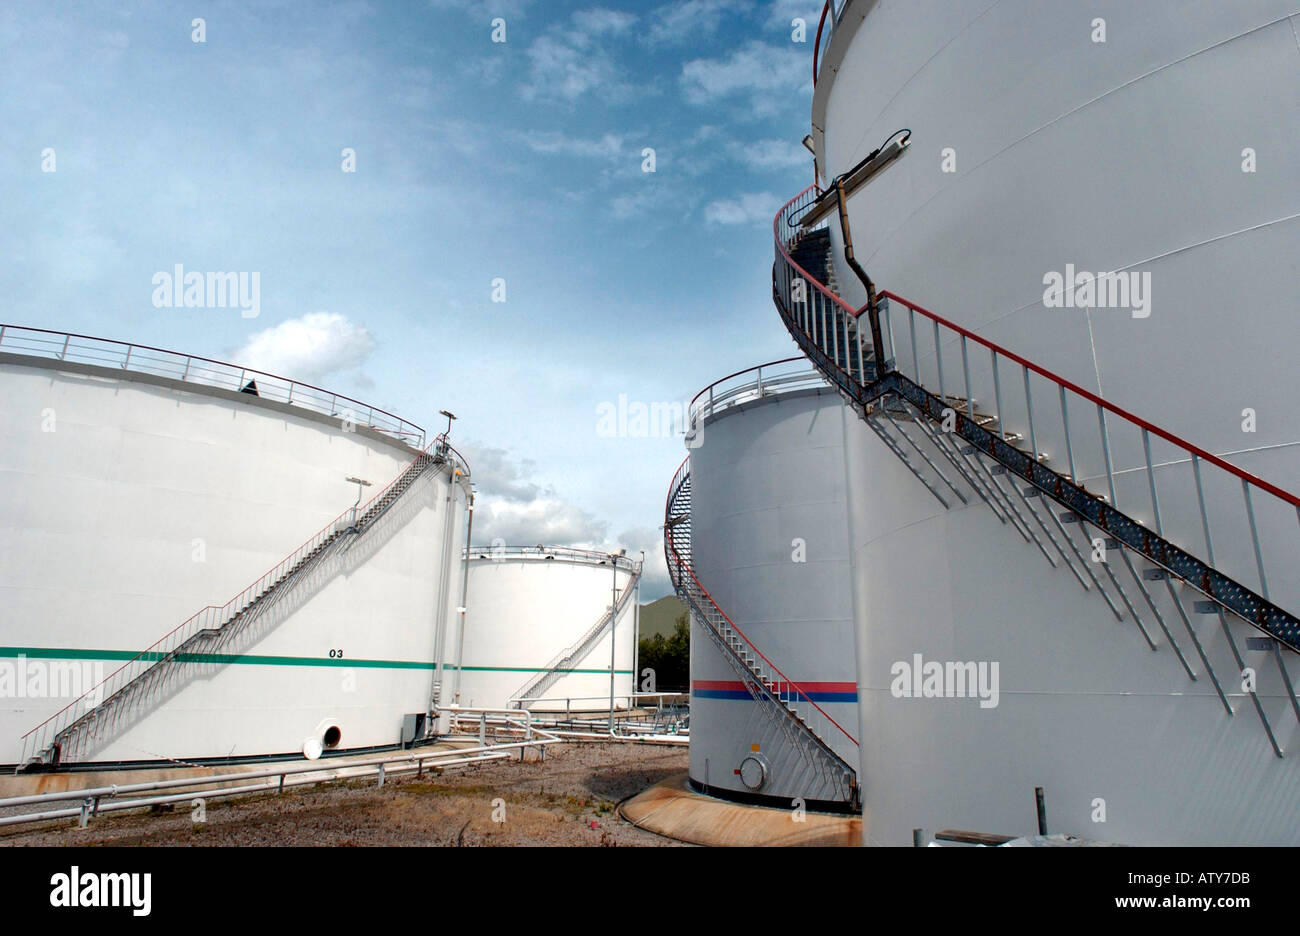 BP fuel depot showing aviation fuel tanks Stock Photo